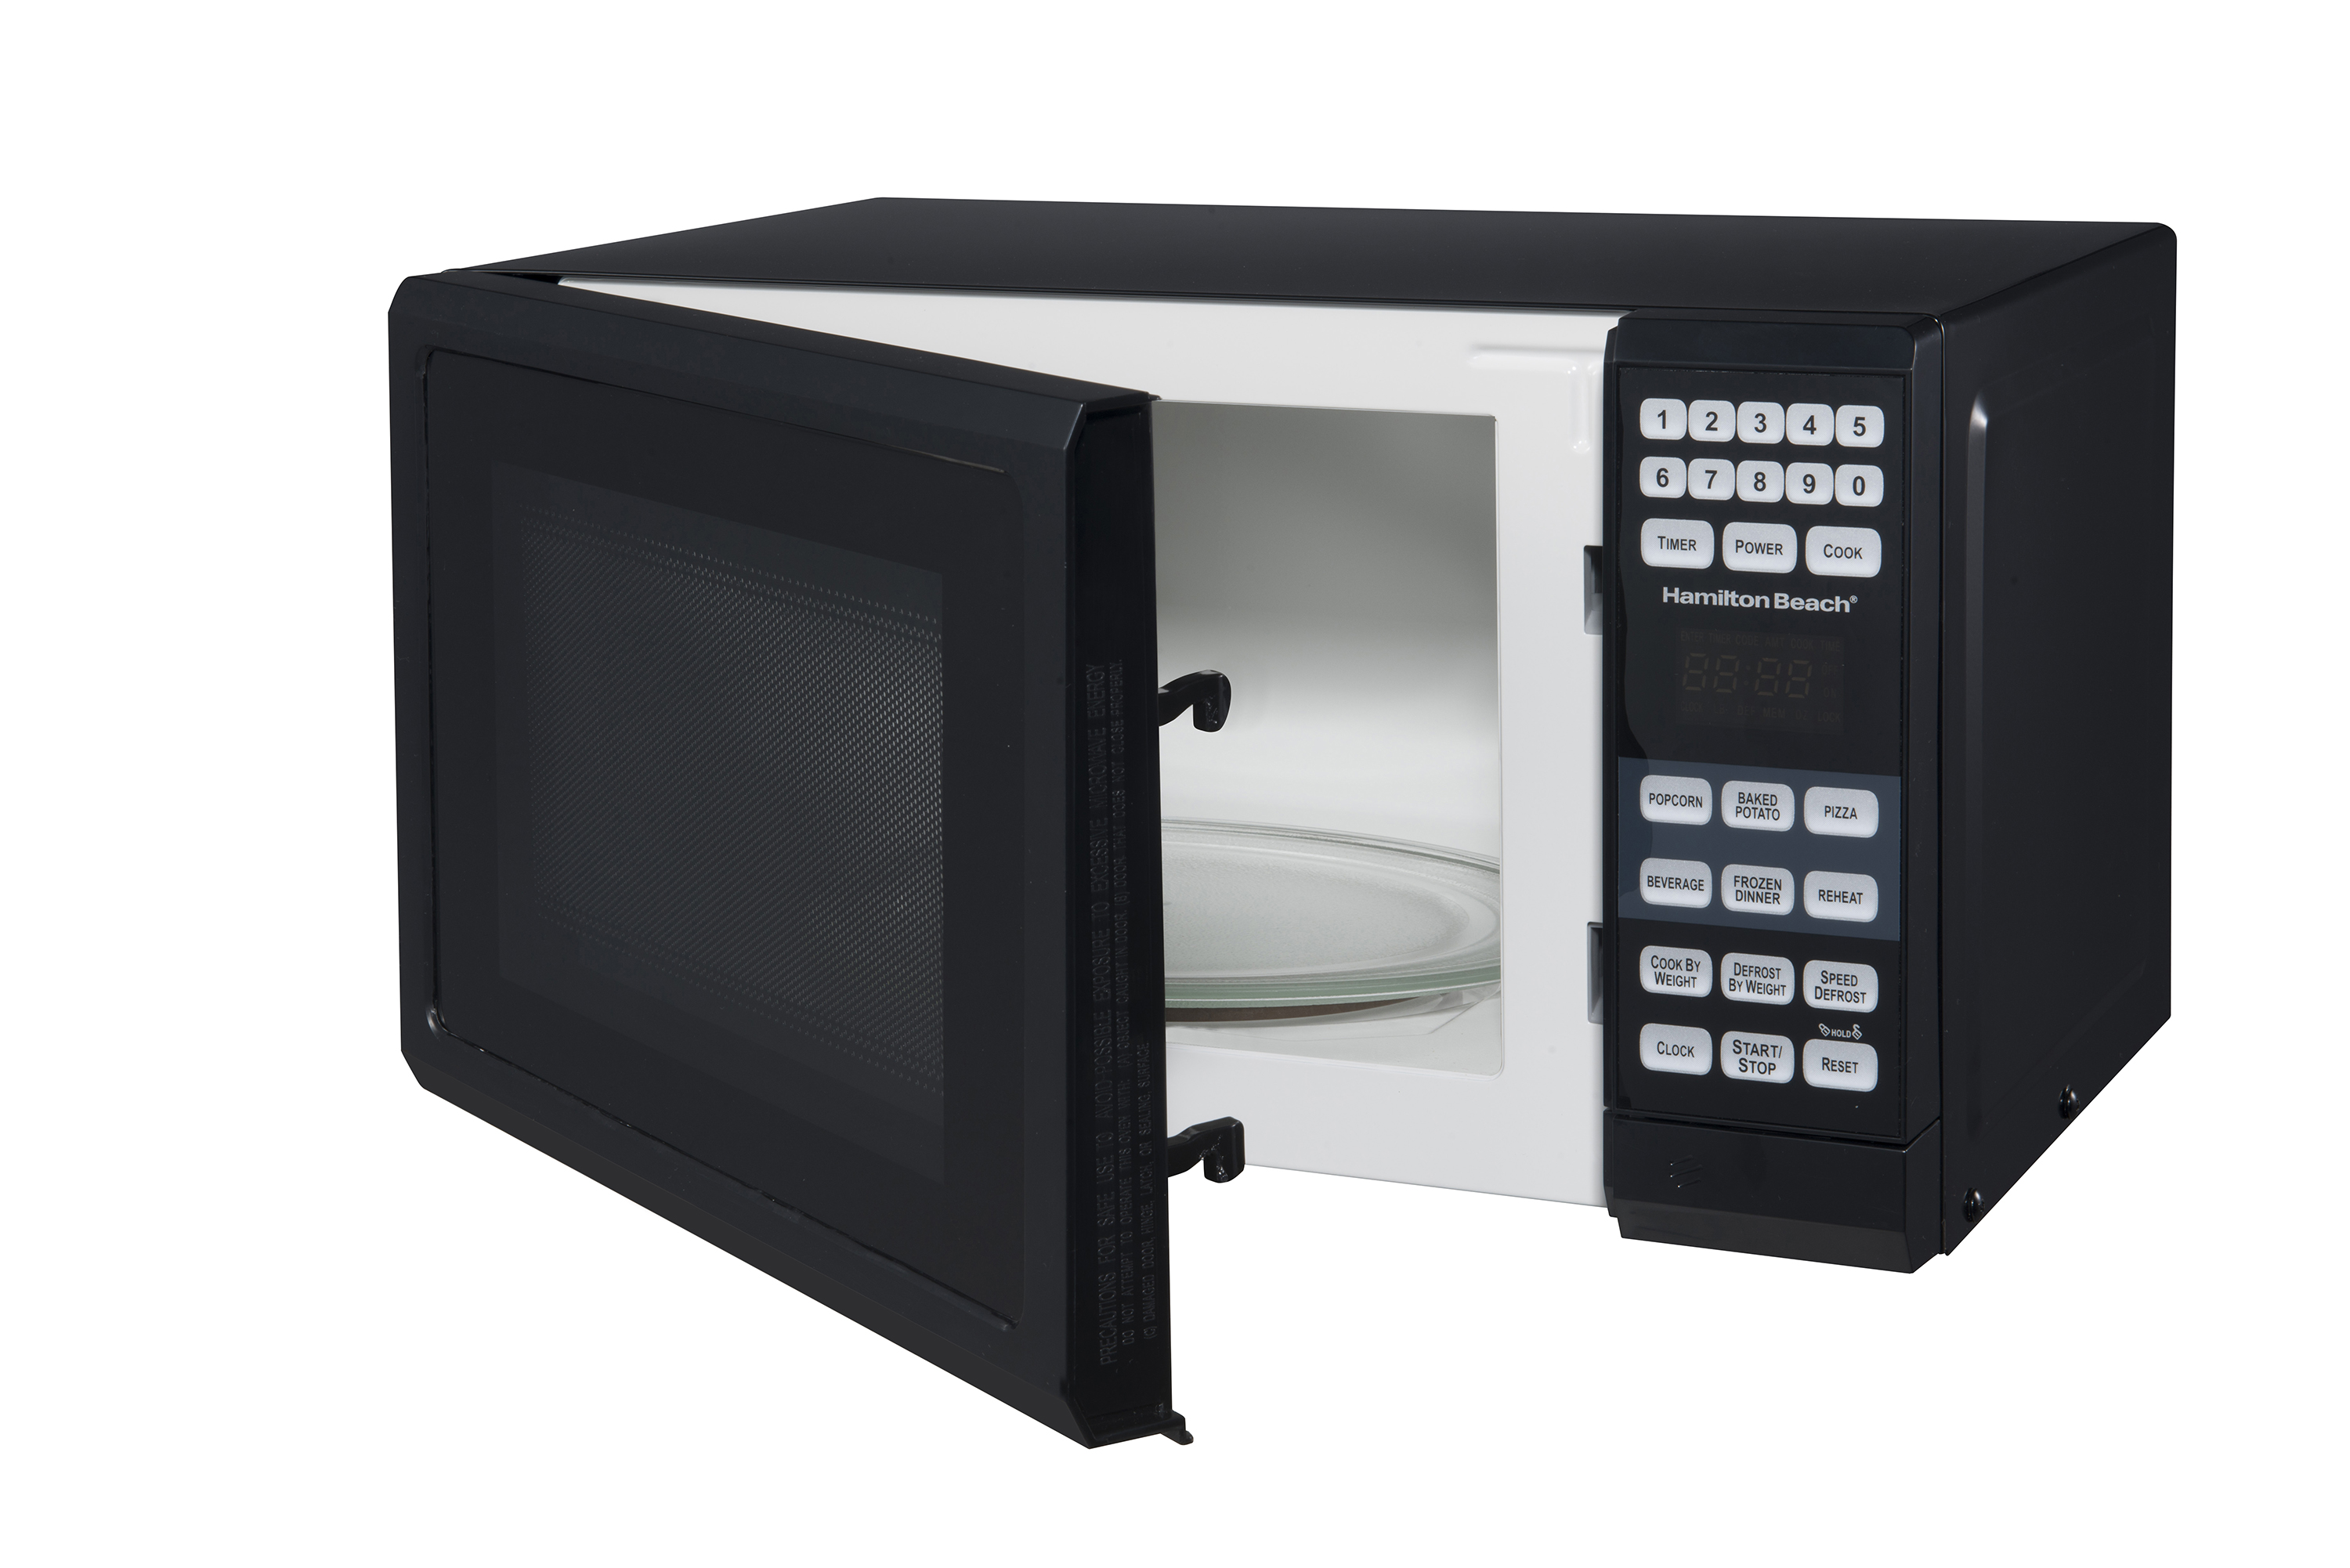 Hamilton Beach 0.7 Cu. Ft. Black Microwave Oven - image 4 of 6